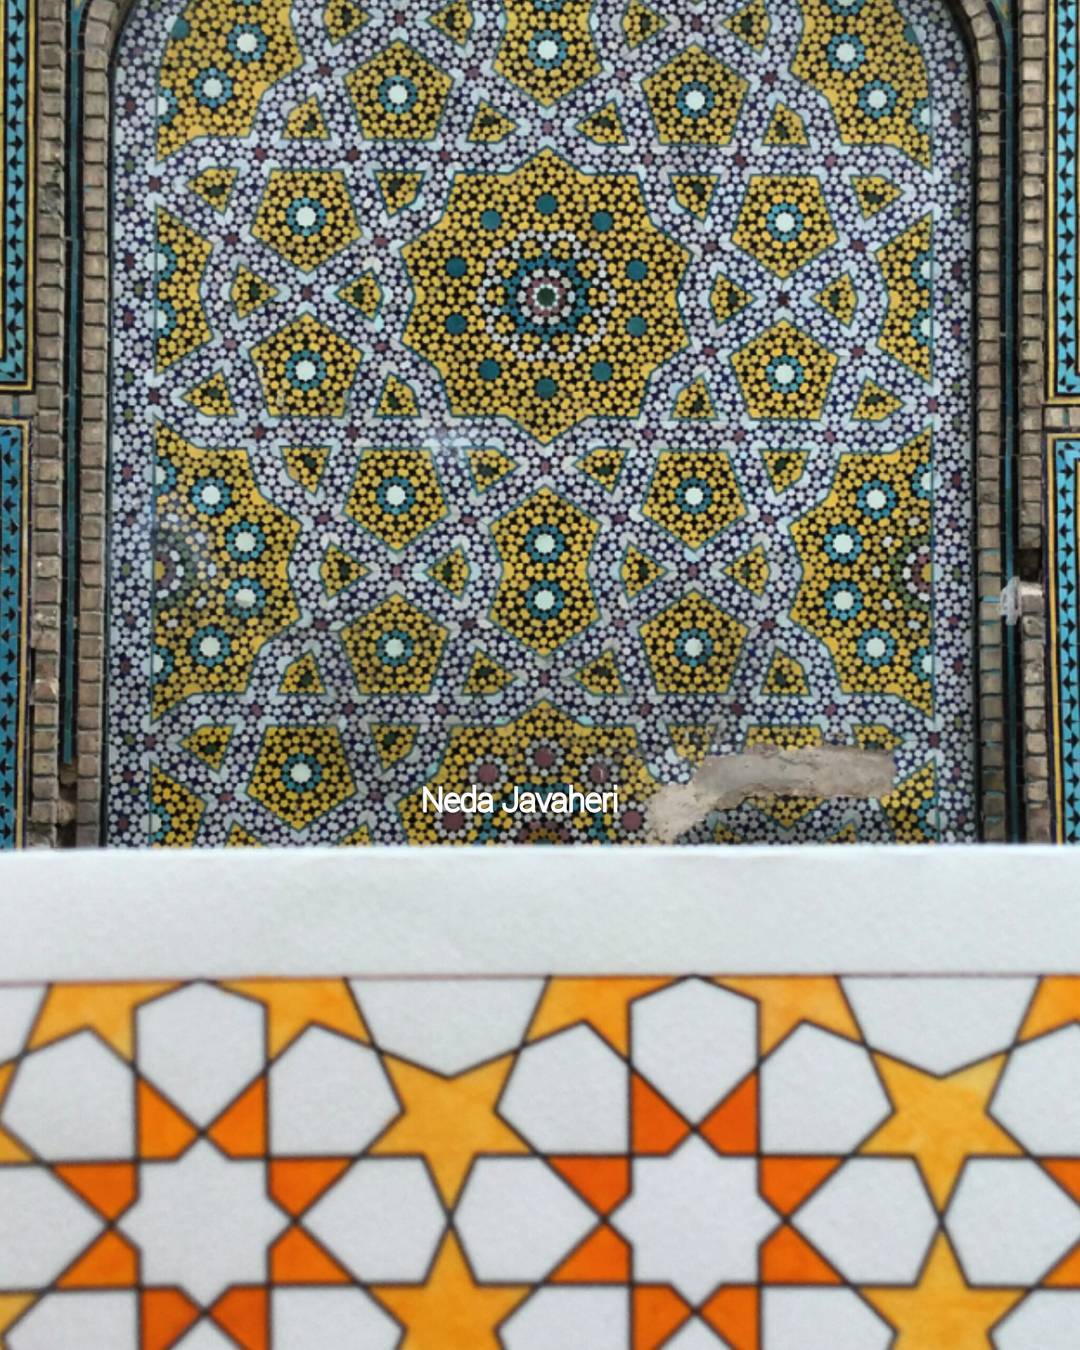 Karya Kaligrafi مدرسه چهارباغ، اصفهان
Chaharbagh School, Isfahan, Iran
#must_see_iran  کارت شمار…- Ne Javaher